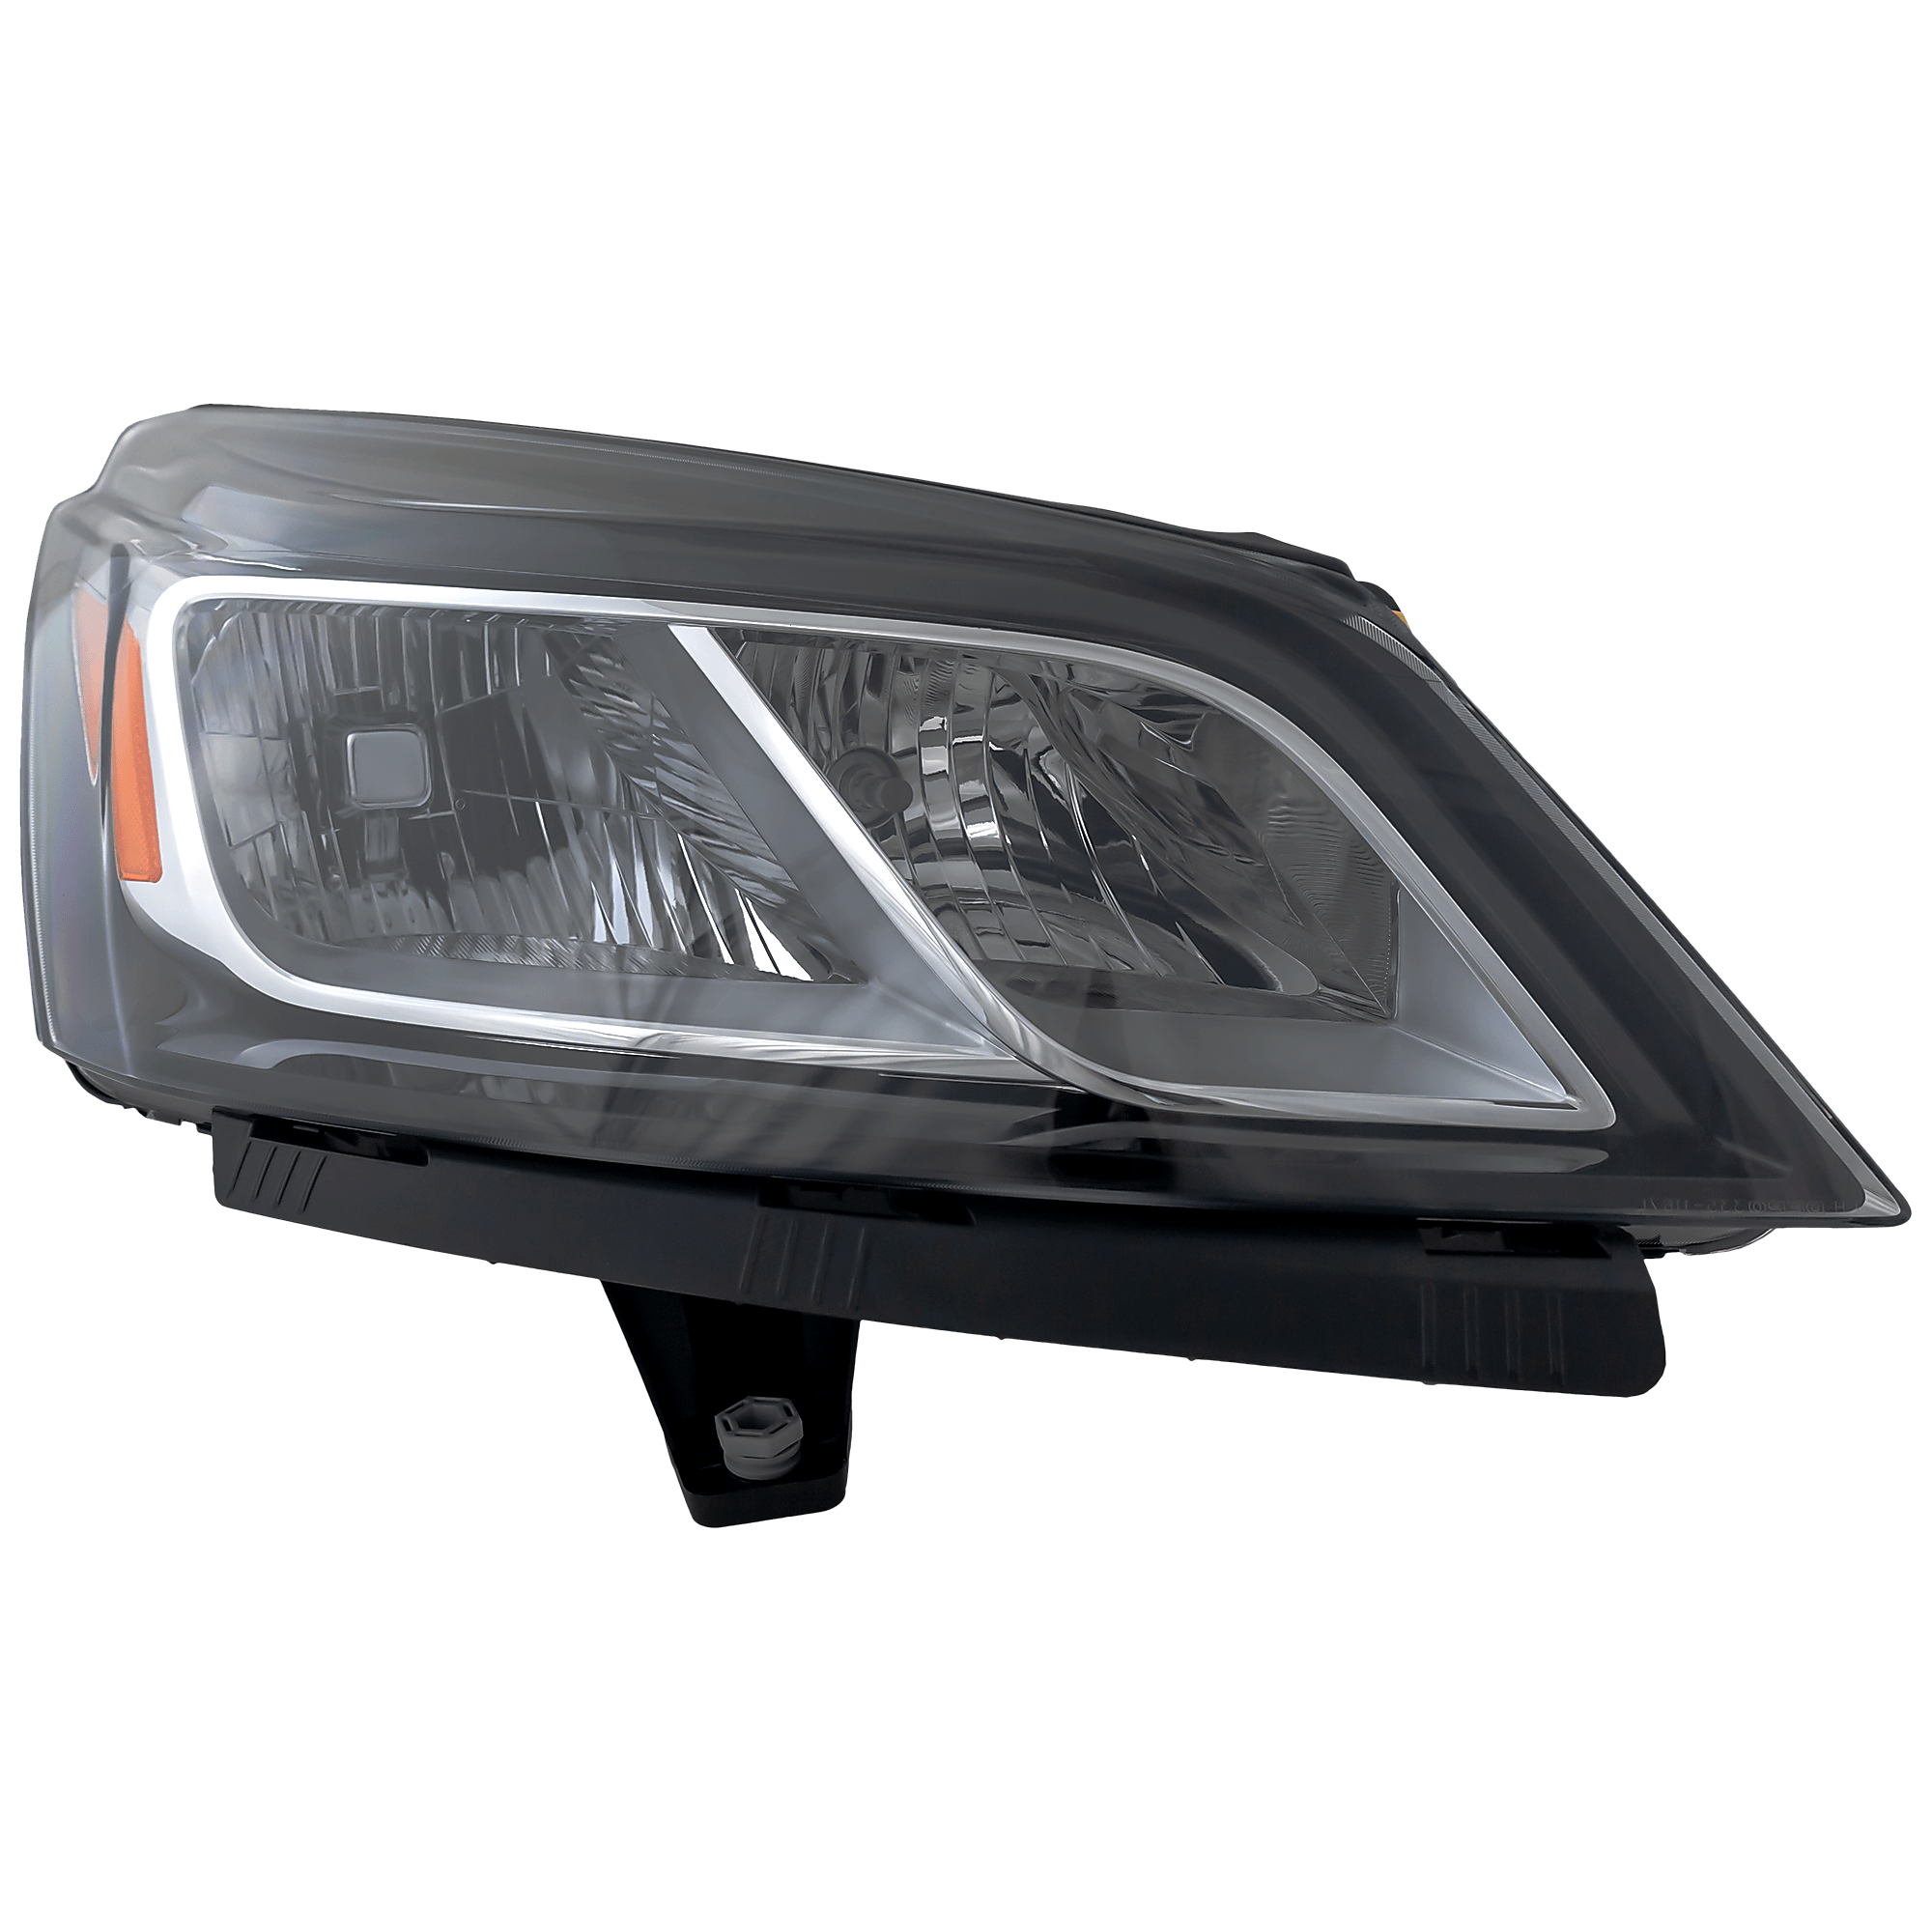 2014 Chevrolet Traverse Headlight Replacement | CarParts.com